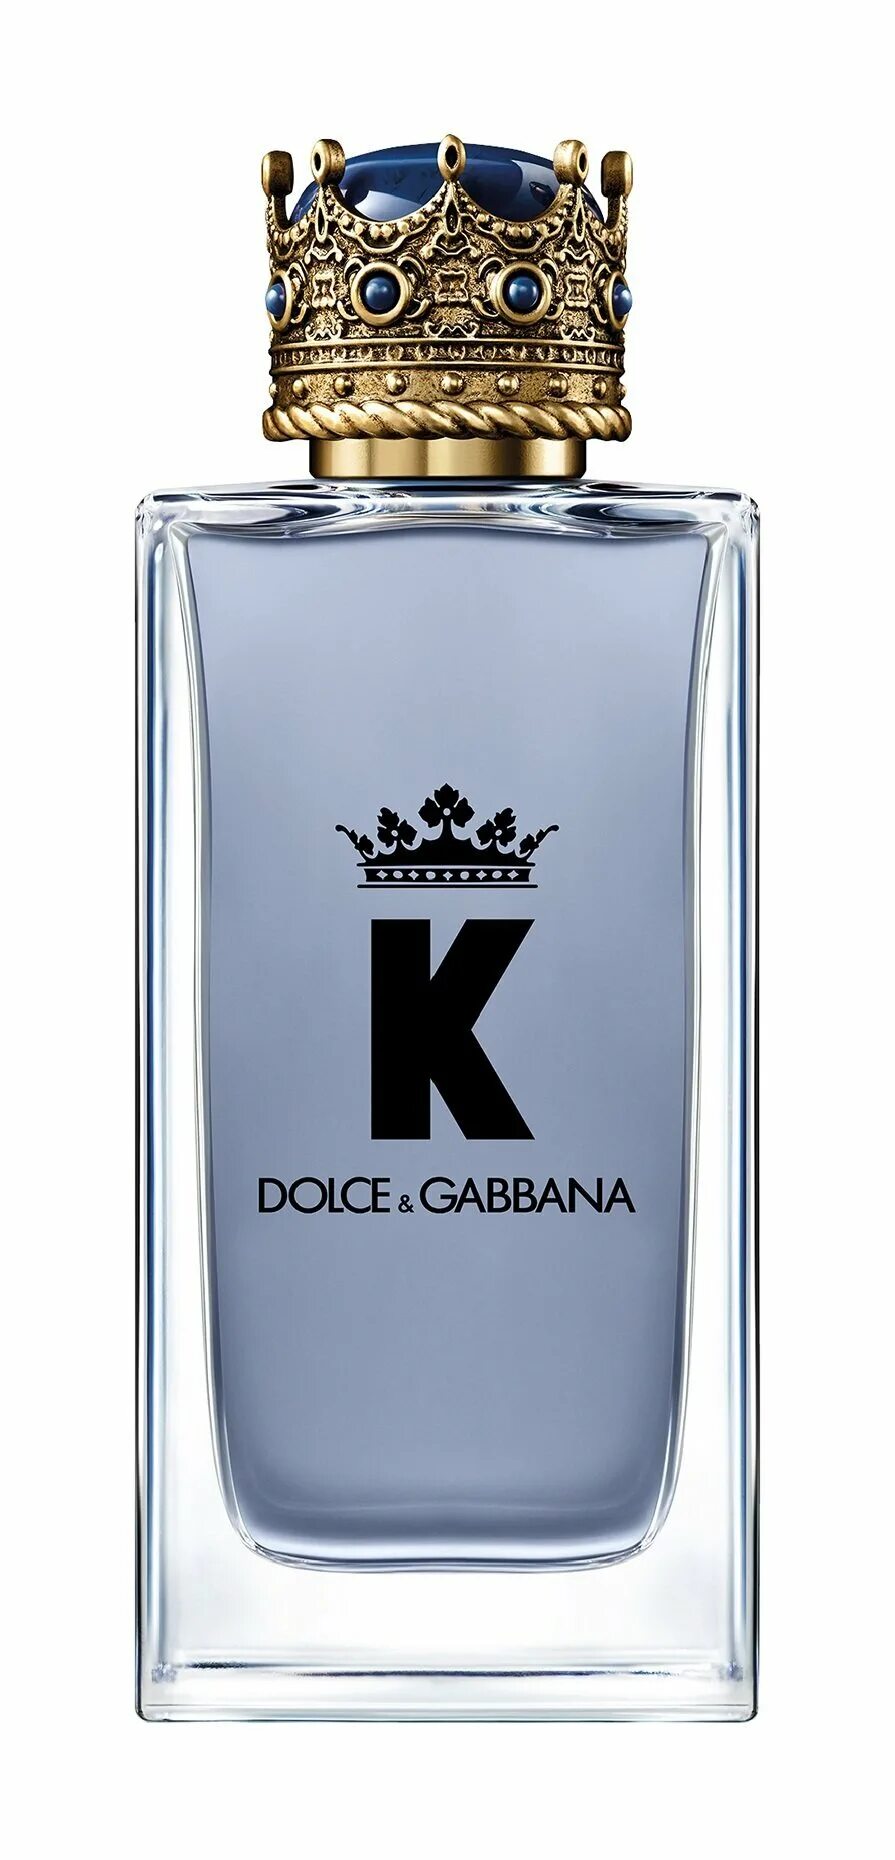 Дольче габбана корона цена. Dolce & Gabbana by k EDP, 100 ml. •Dolce&Gabbana k EDT 100ml. Dolce Gabbana k King 100ml EDT. Dolce Gabbana King 100ml.